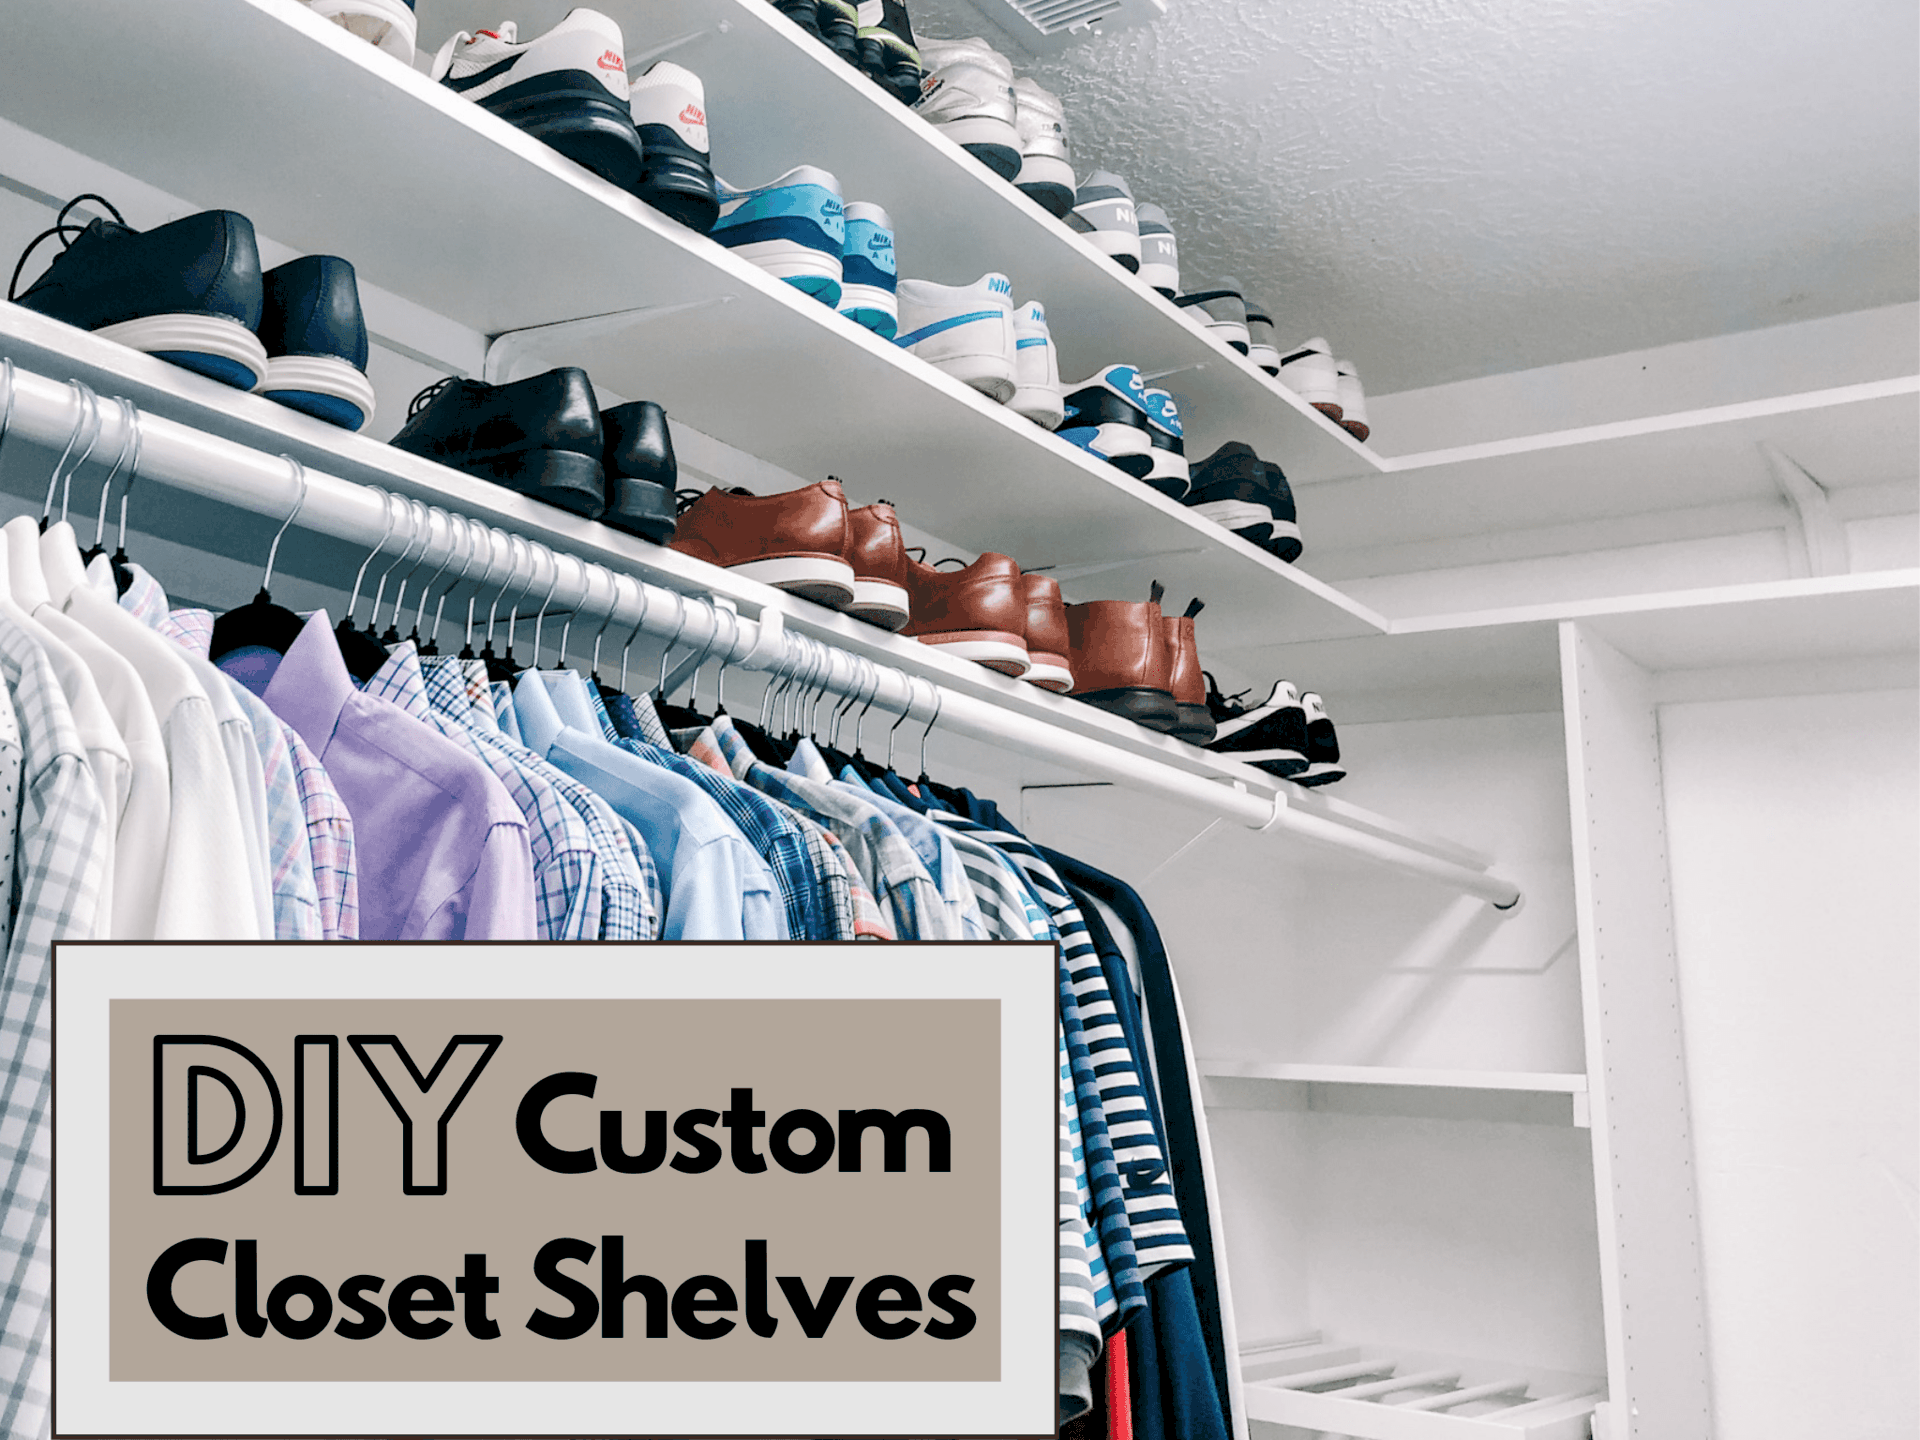 DIY Custom Shelving installed into closet for organization